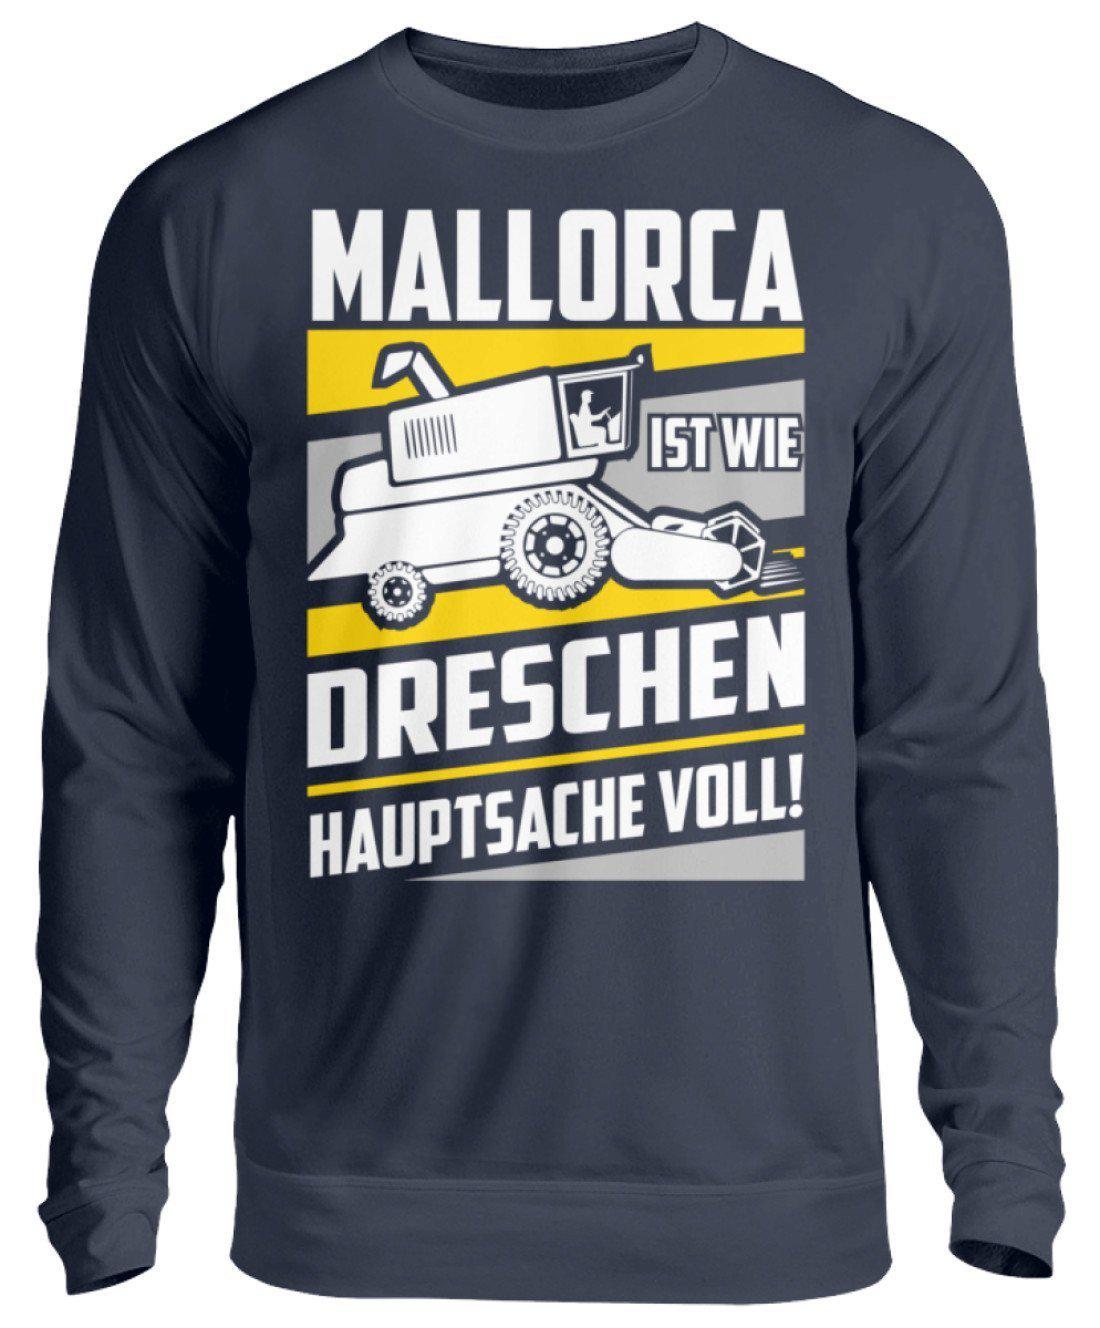 Mallorca Dreschen · Unisex Sweatshirt Pullover-Unisex Sweatshirt-Oxford Navy-S-Agrarstarz